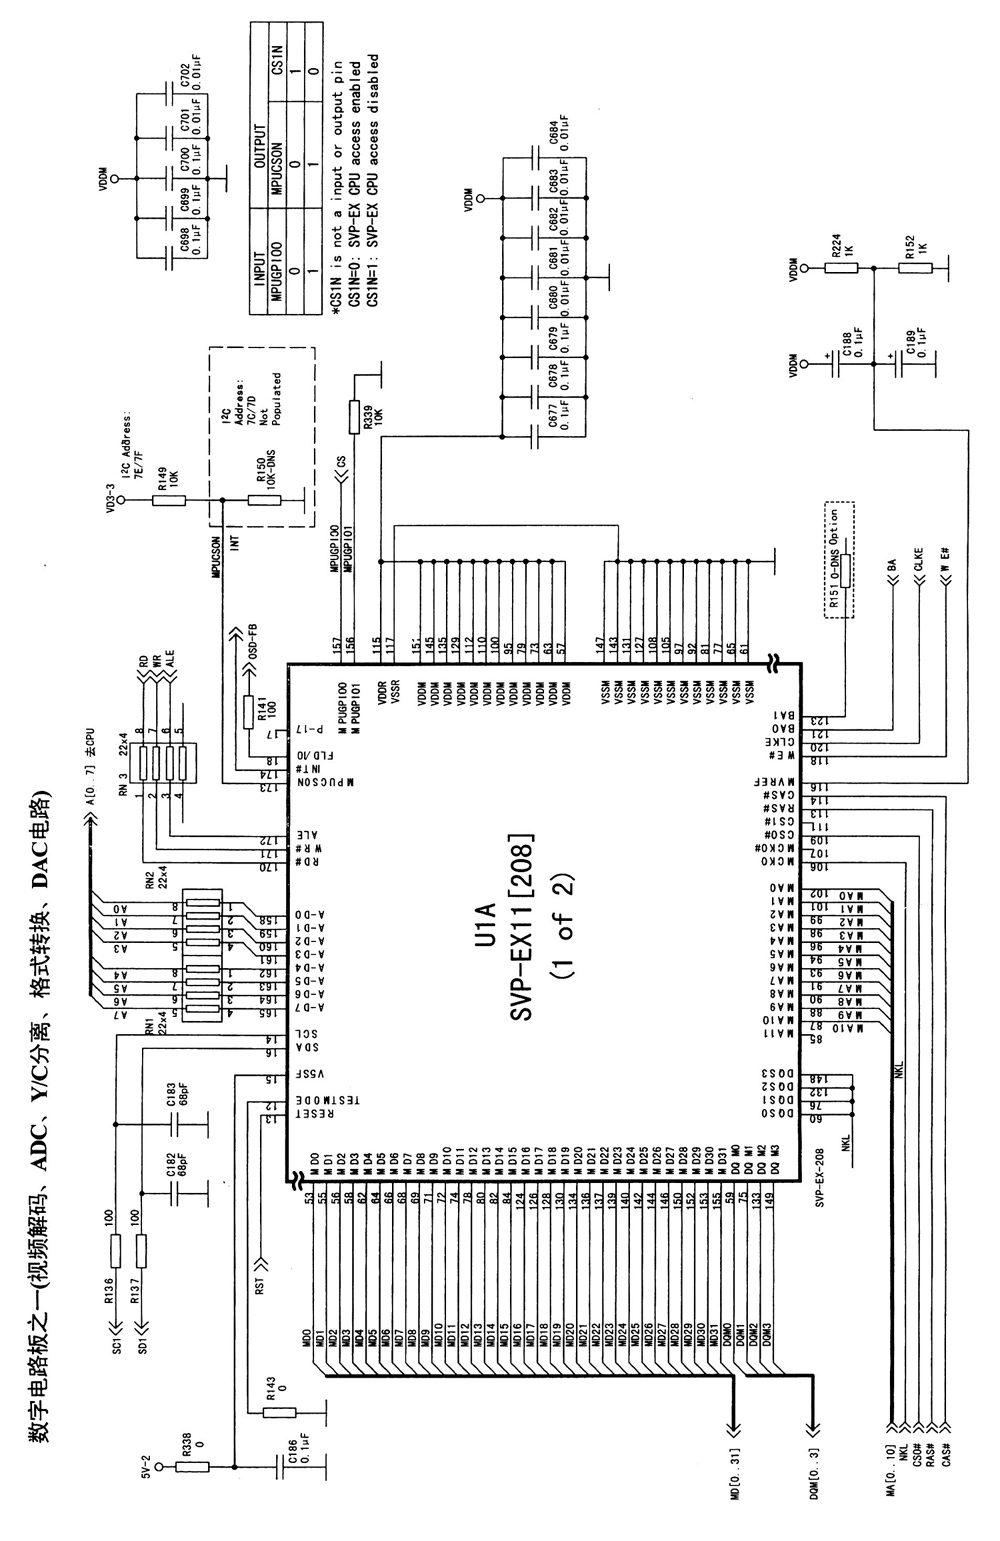 Konka P29ST217 high-definition digital CRT color TV circuit schematic (4)